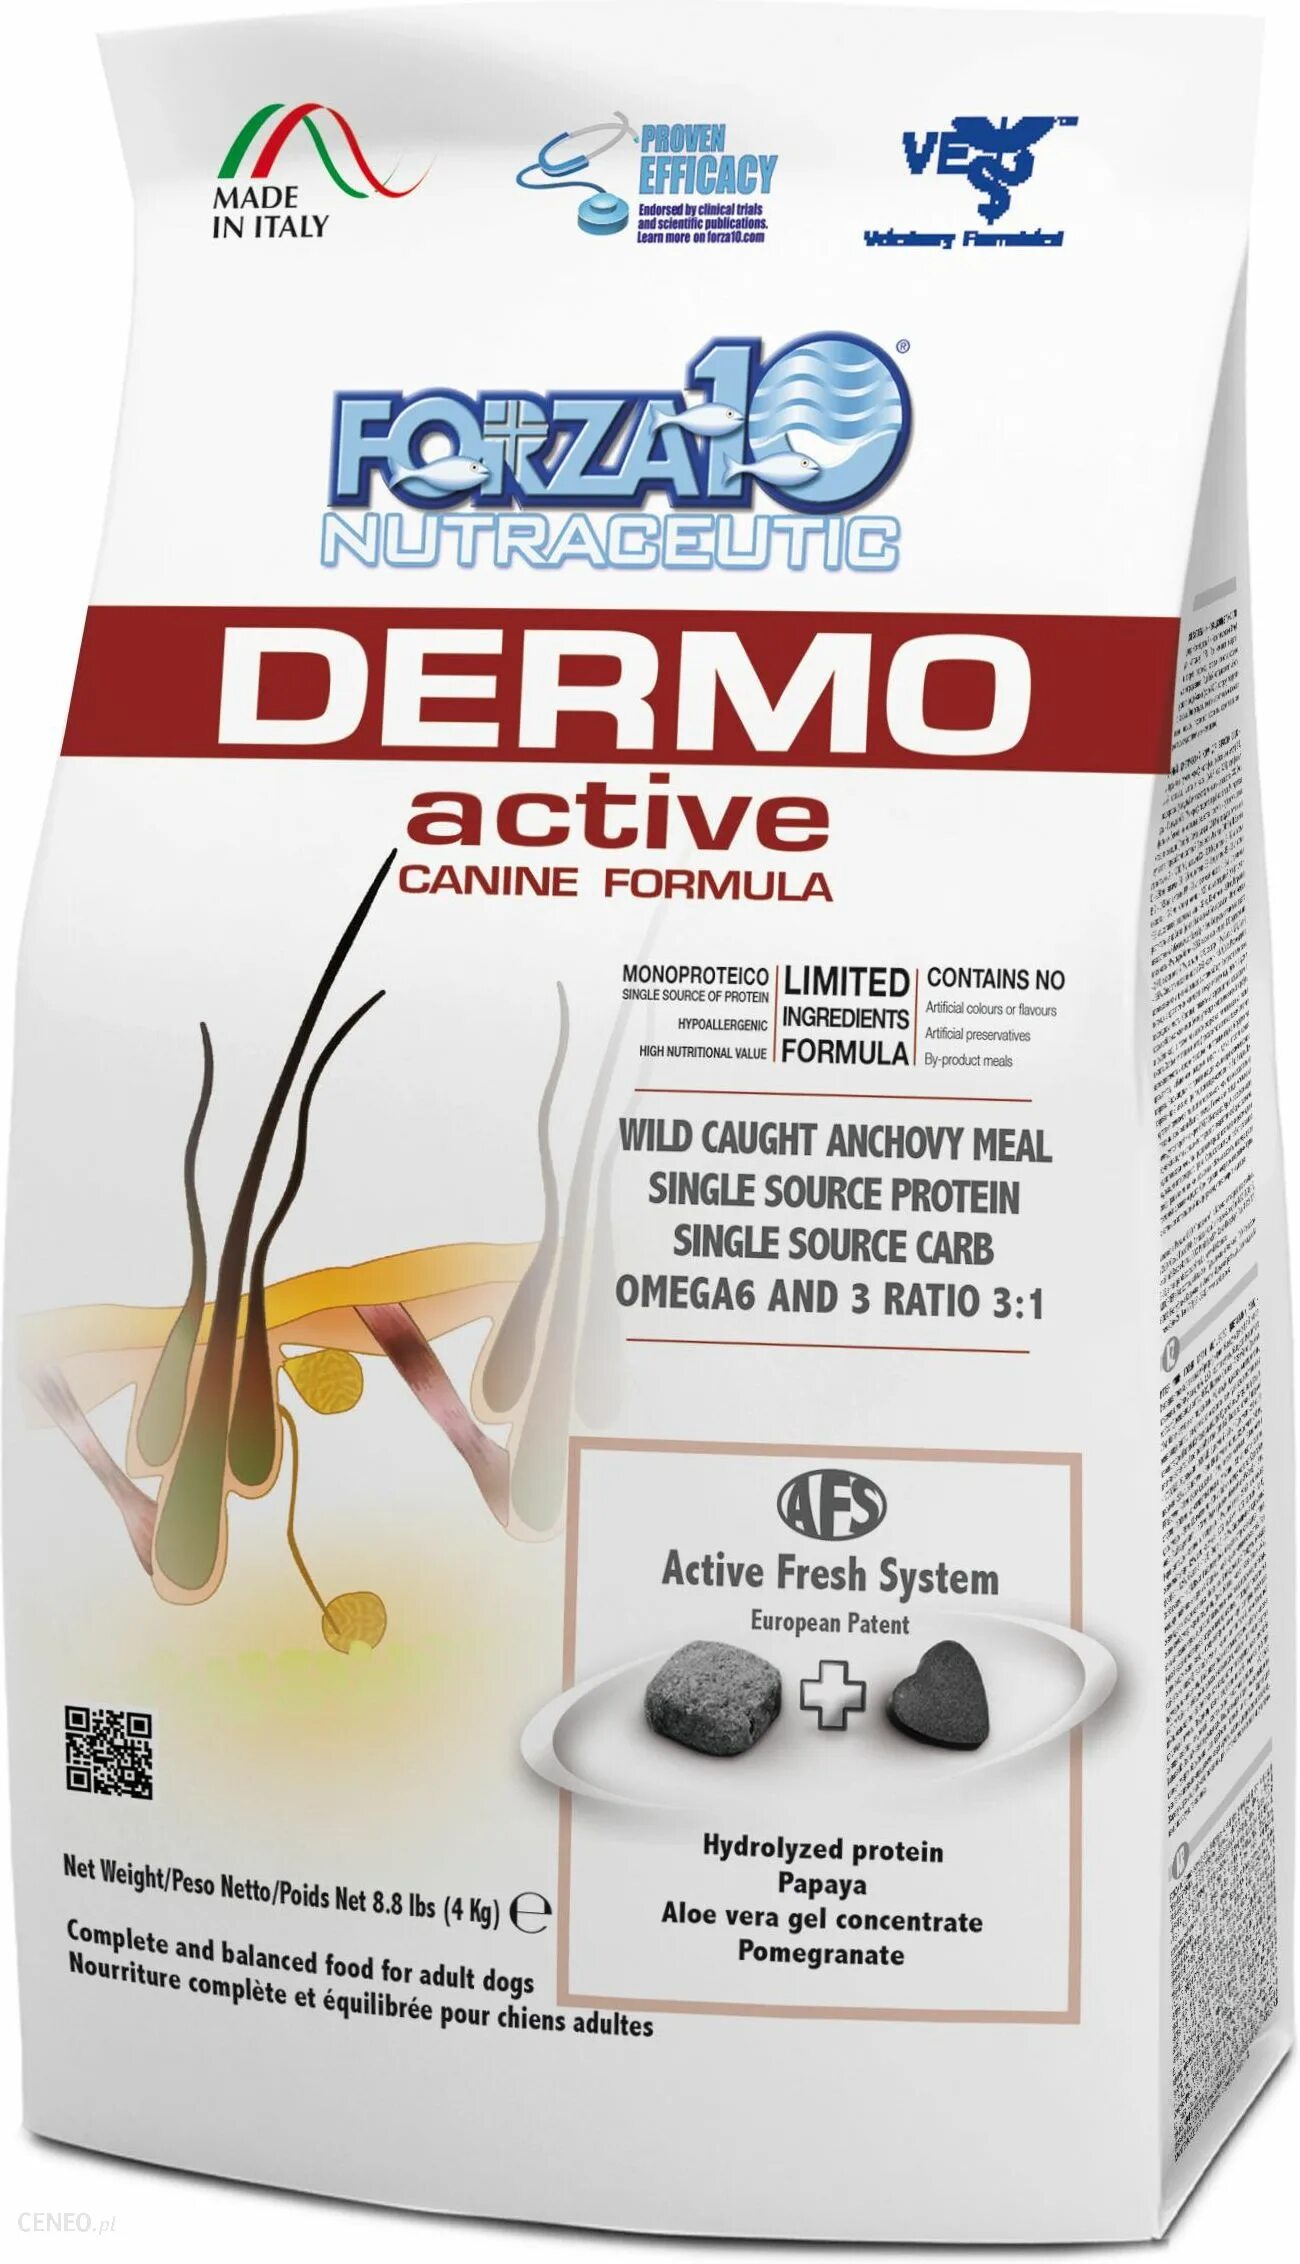 Актив 10. Forza10 Dermo Active. Forza10 Dermo Active (10 кг). Корм forza10 Active Dermo. Forza 10 Dermo Active корм для собак.